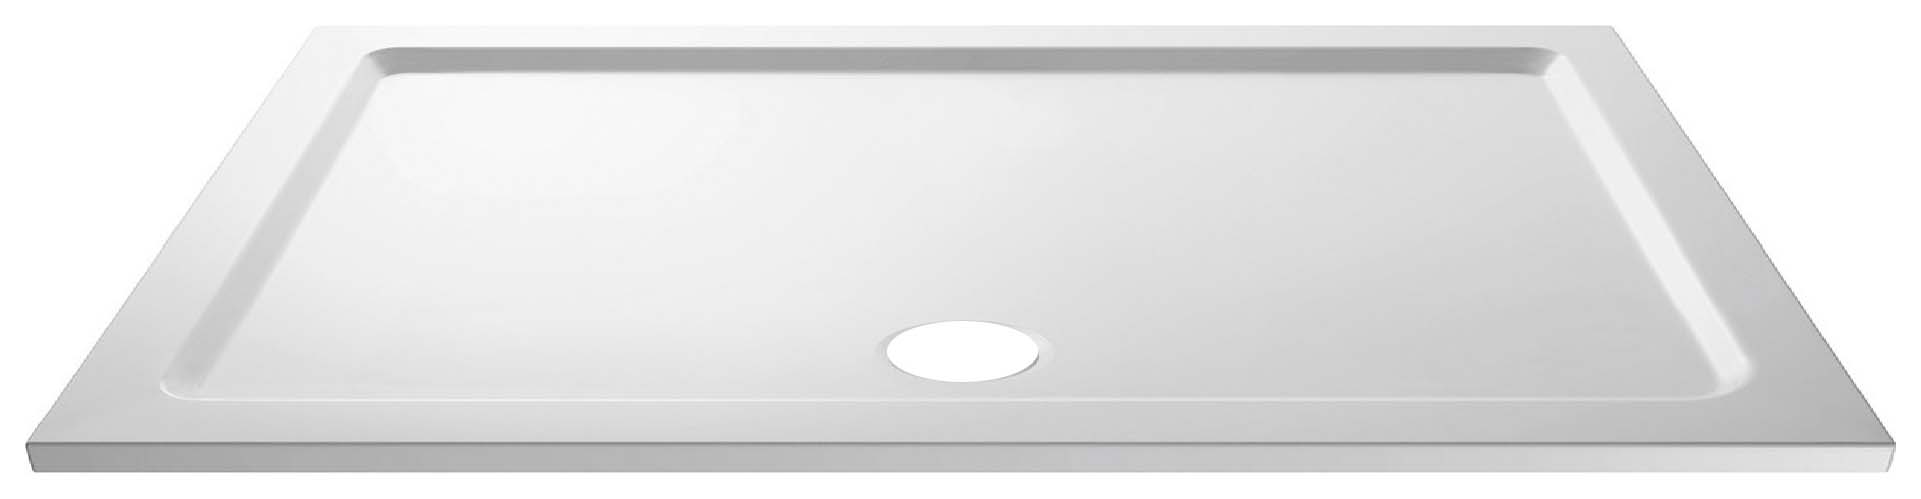 Wickes 40mm Pearlstone Rectangular Shower Tray - 1500 x 700mm